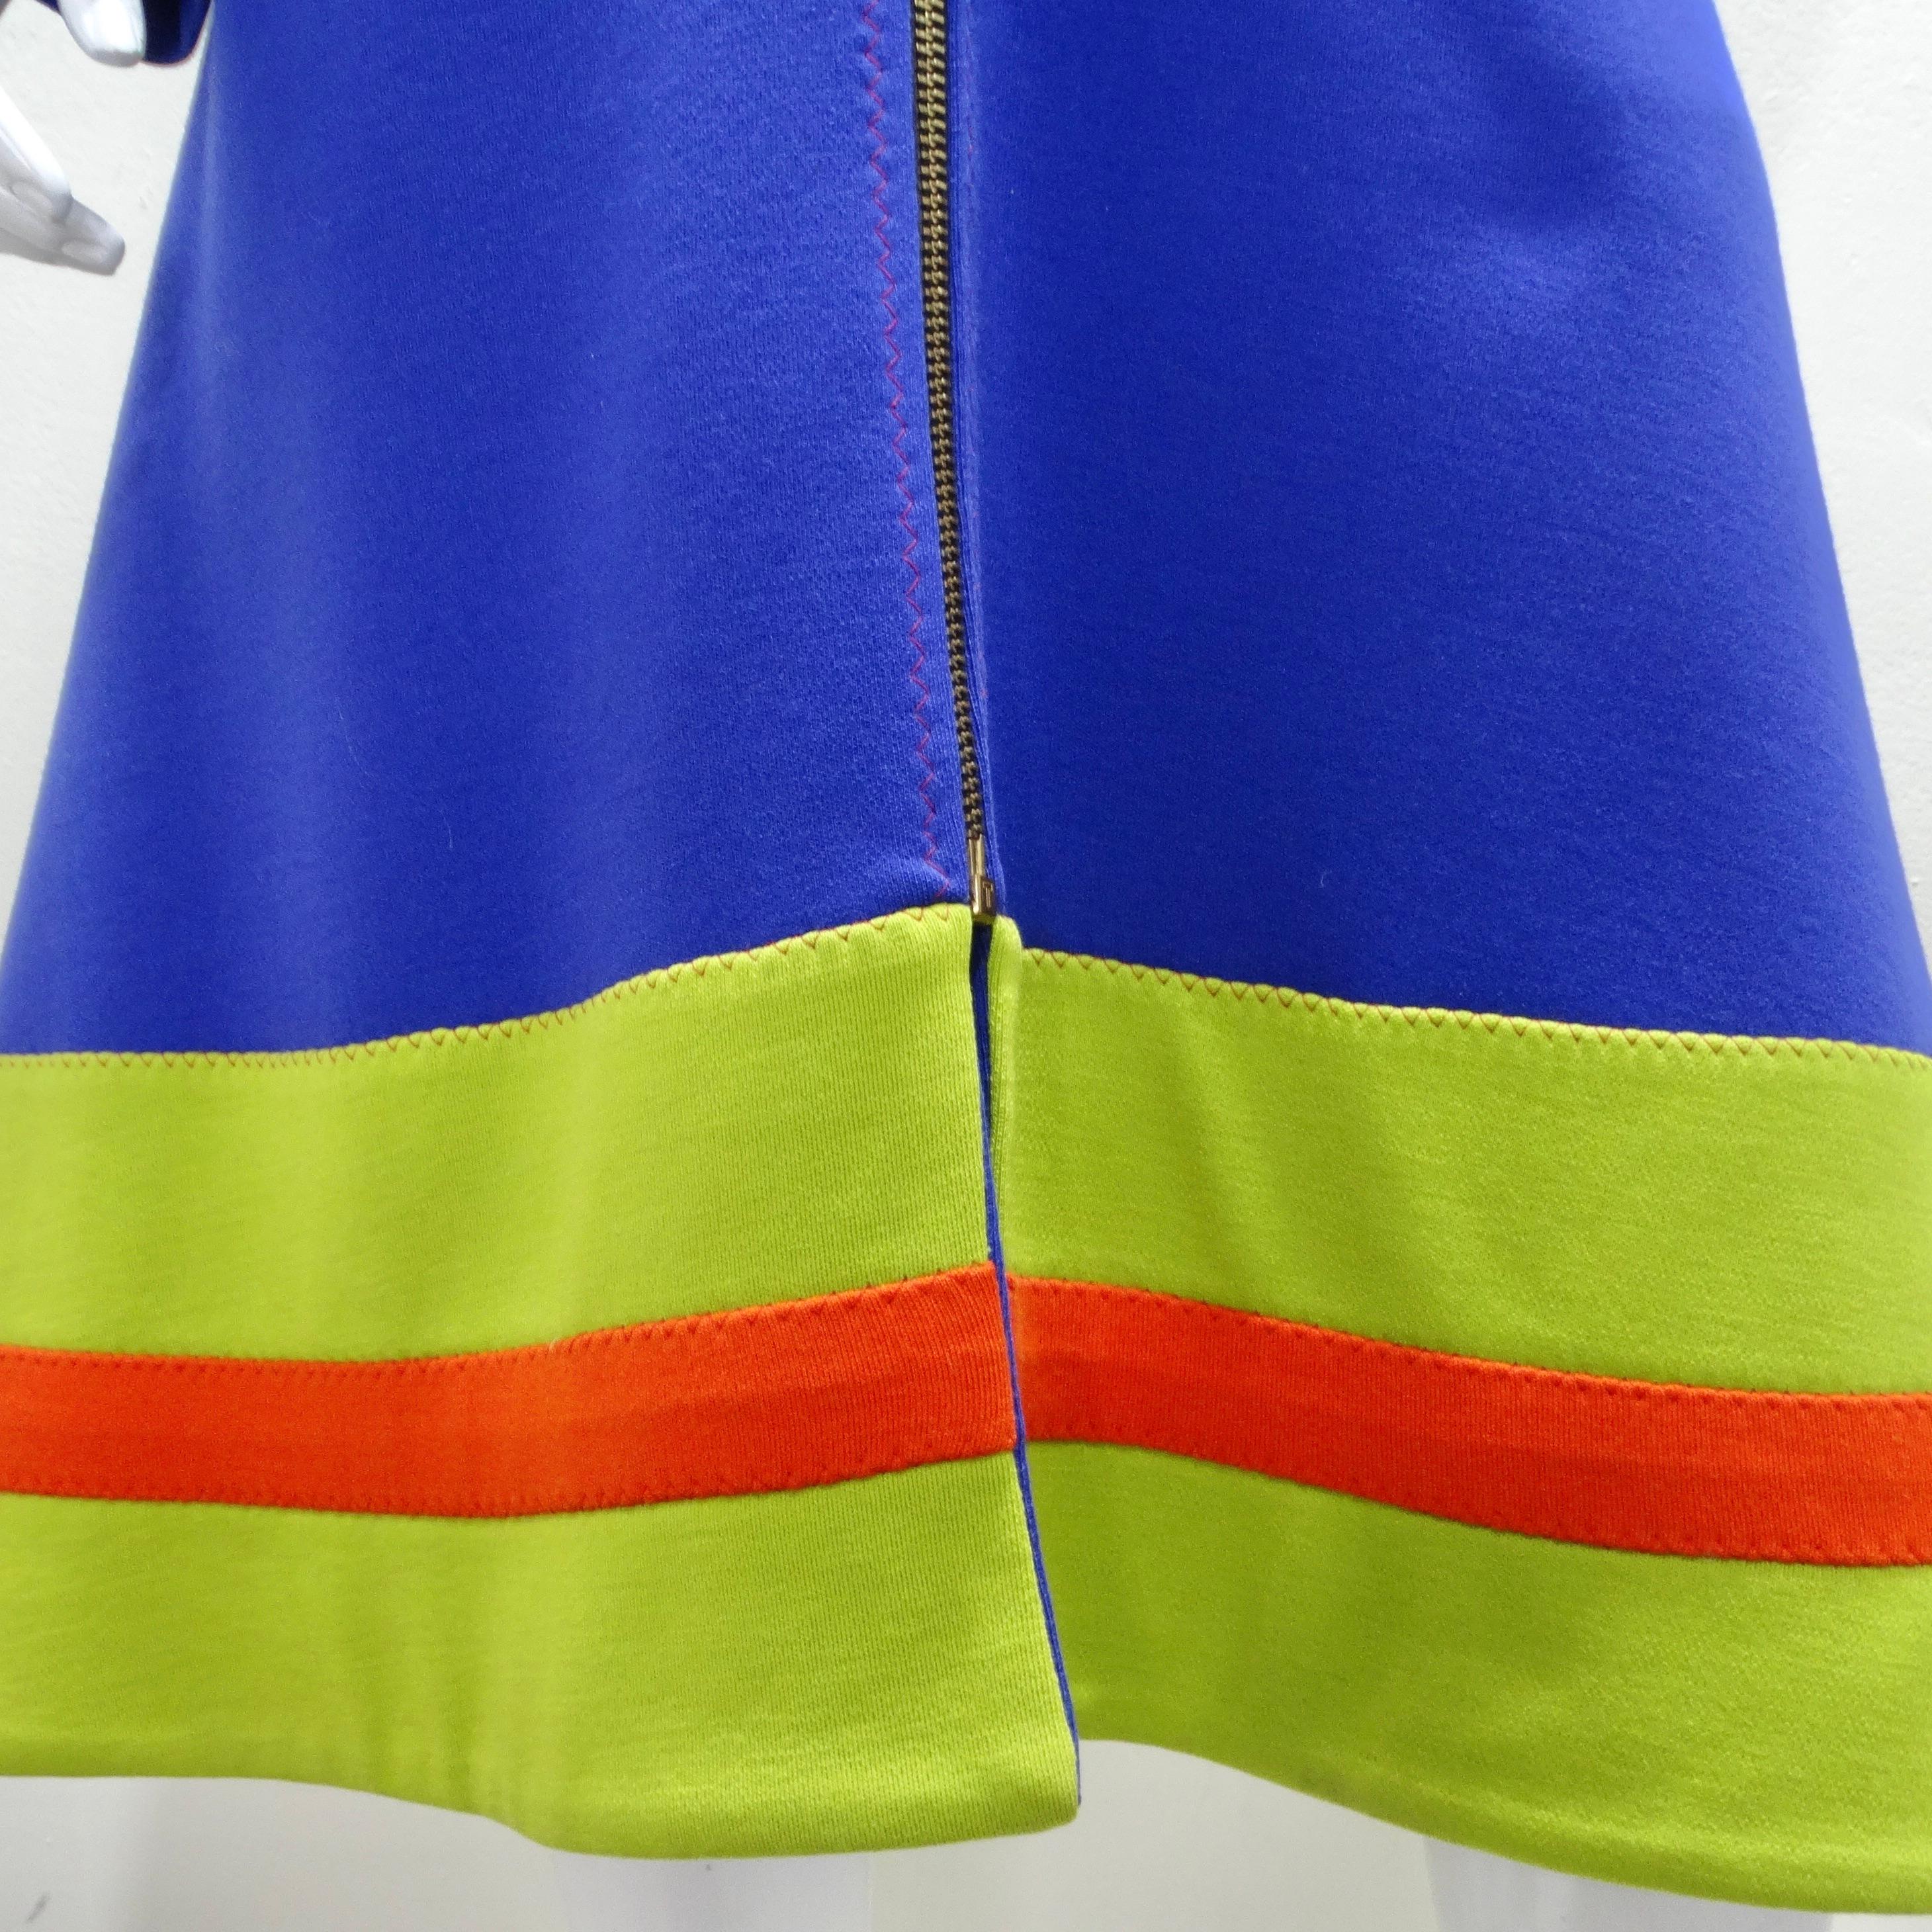 1960s Mod Color Block Jacket Dress In Excellent Condition For Sale In Scottsdale, AZ